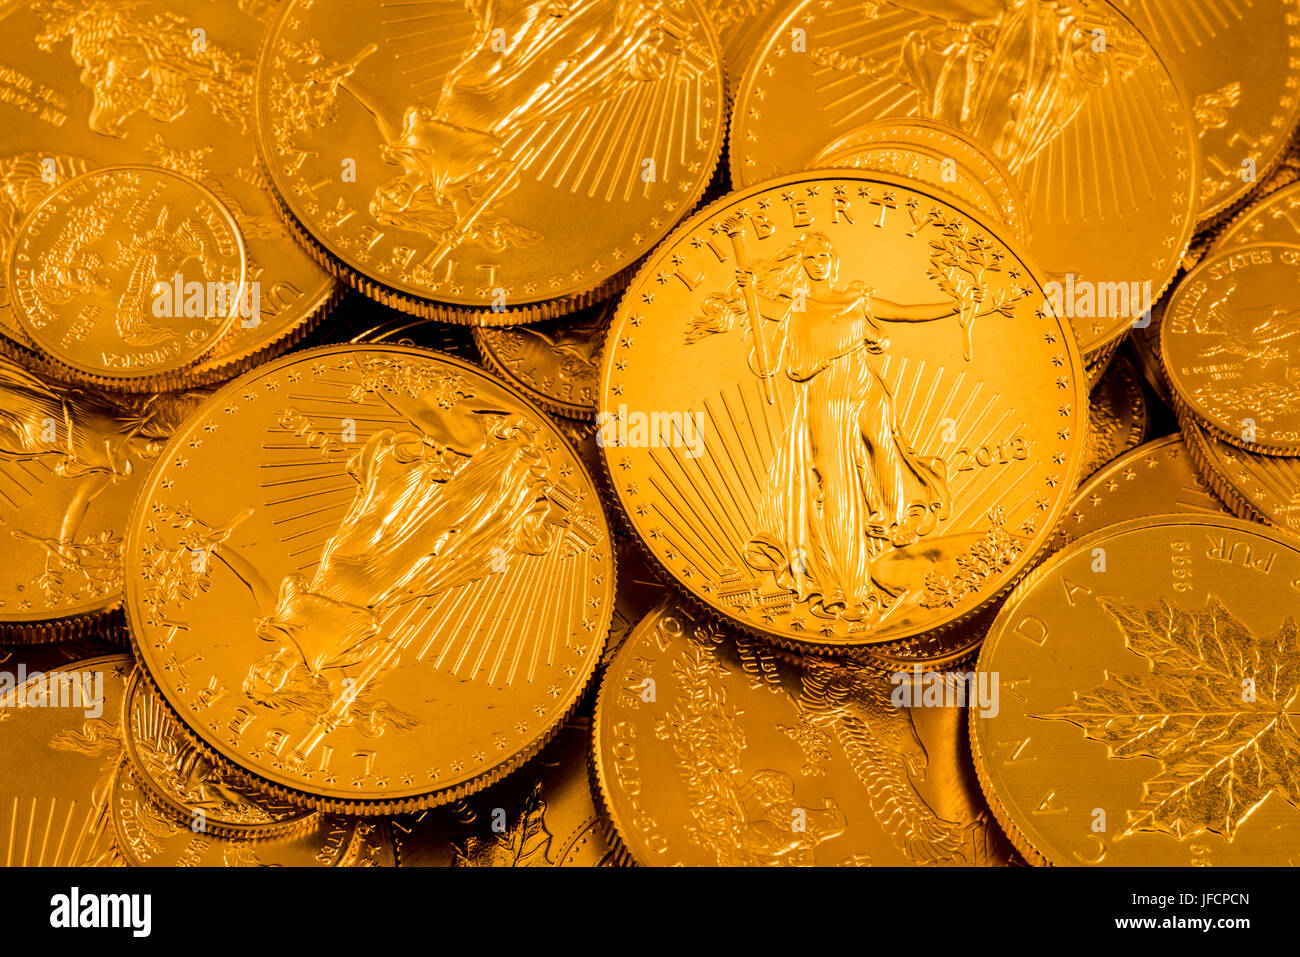 Liberty Gold Eagle one ounce coin Stock Photo